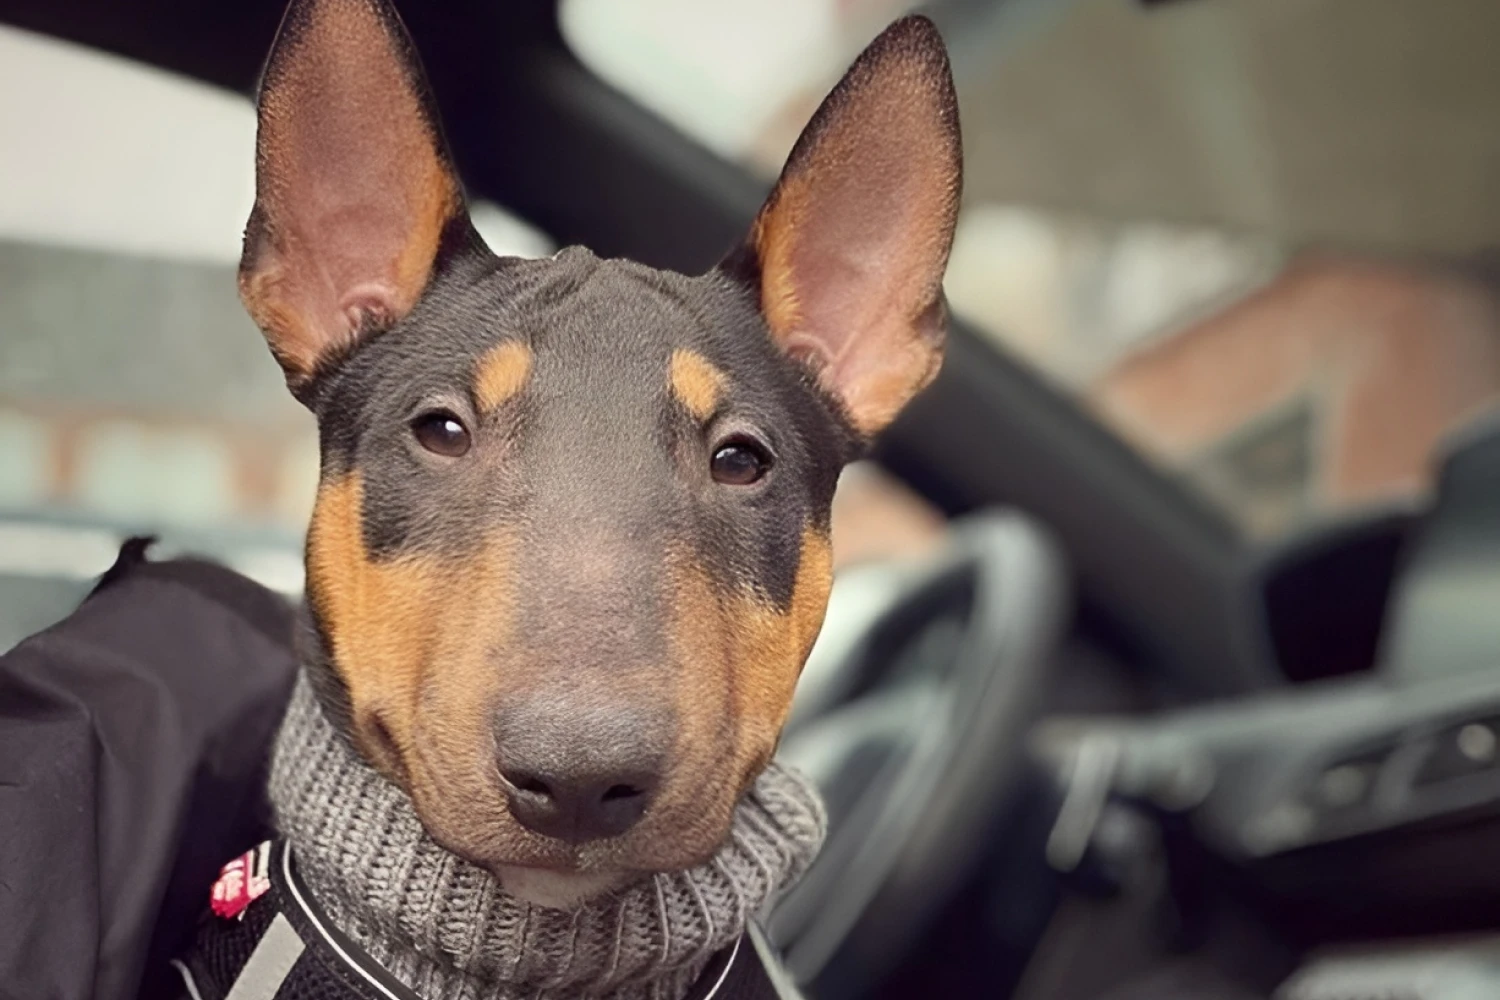 Honda HR-V Dog Car Seat for Miniature Bull Terriers